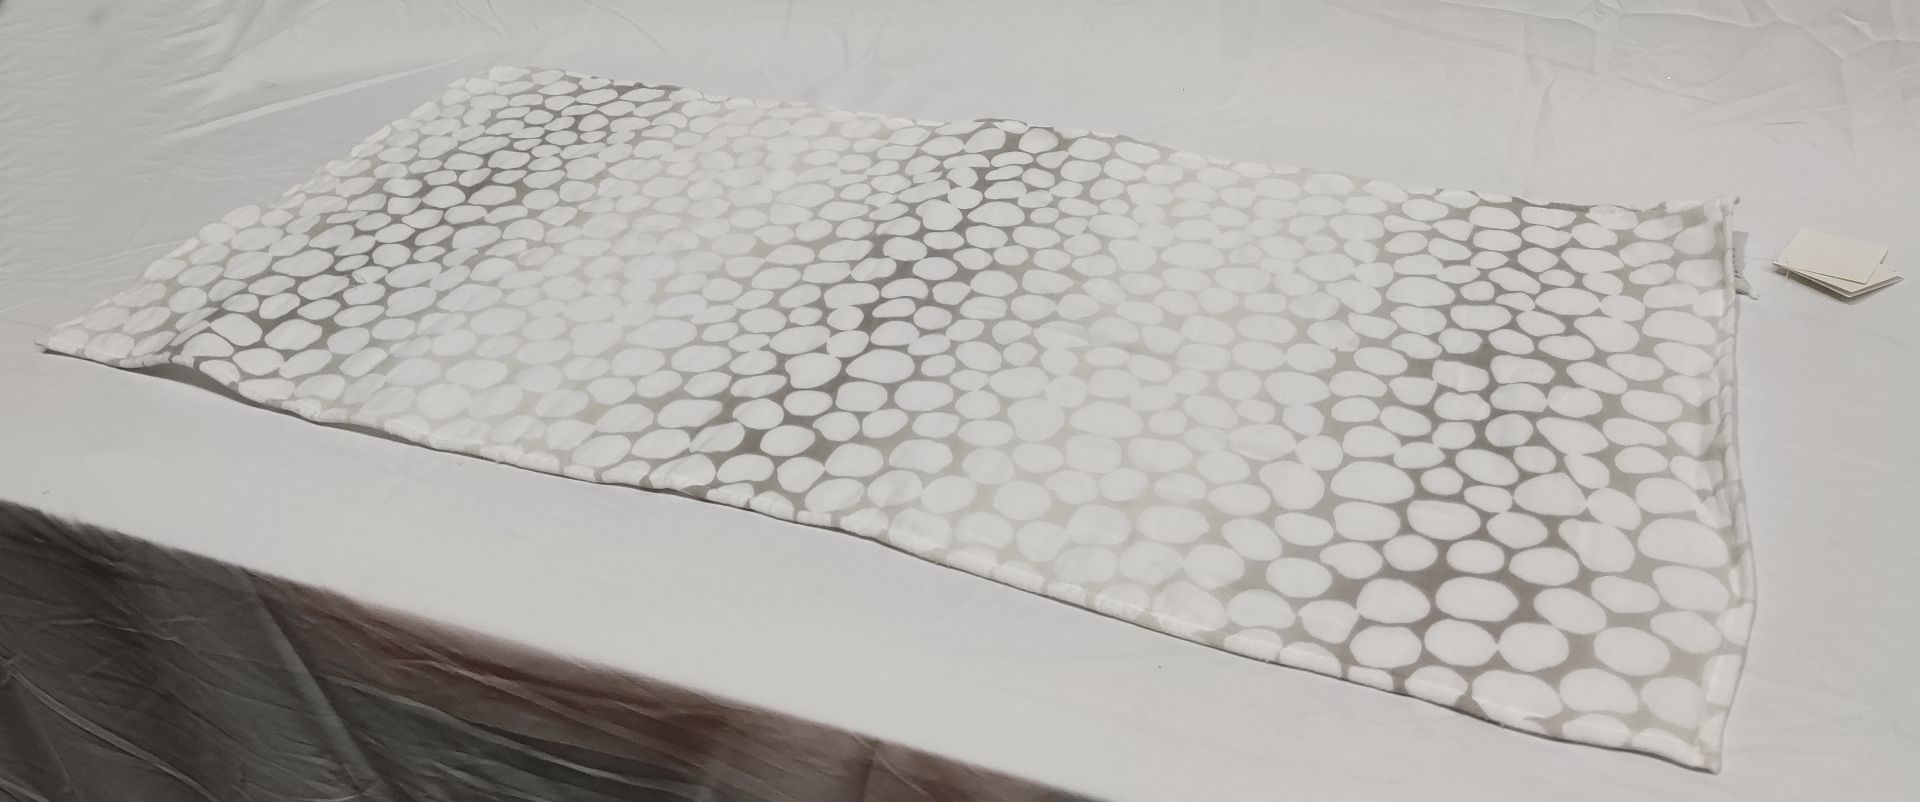 1 x UCHINO Japanese Fine Pattern Hand Towel 50X100cm - Grey - Original RRP £69.96 - Ref: 7395403/ - Image 6 of 10